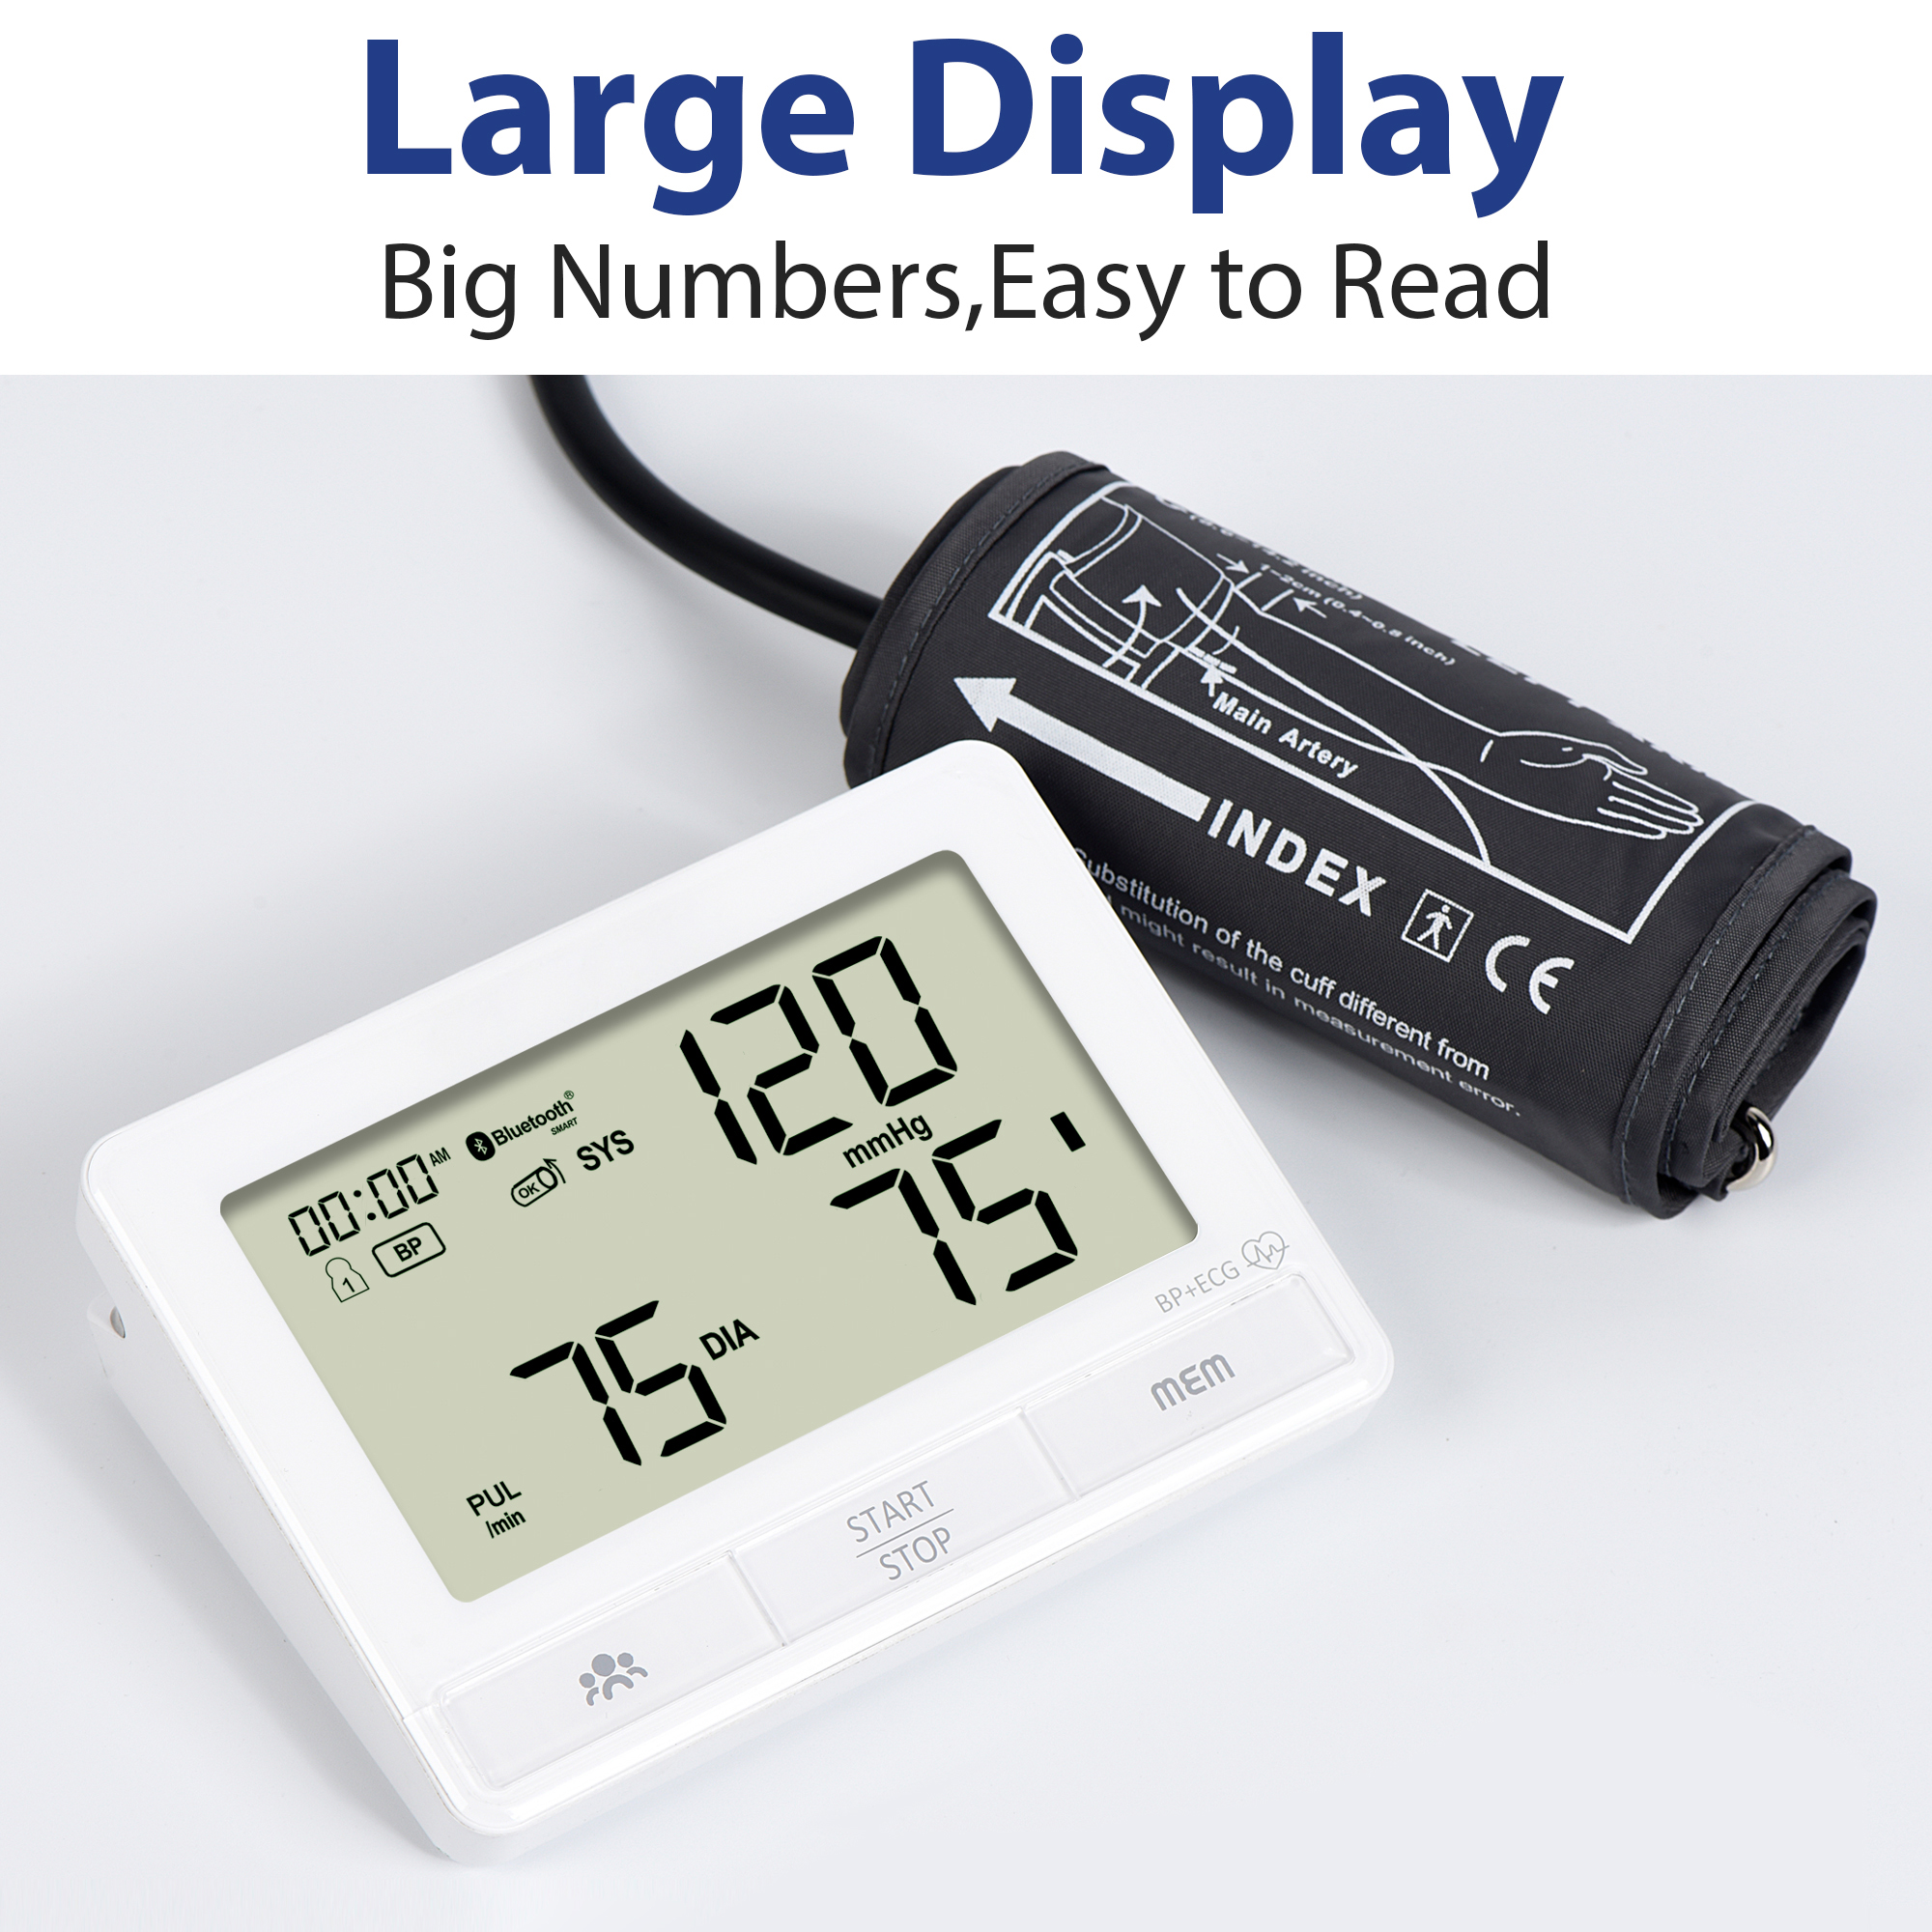 Mercury sphygmomanometer is better than digital blood pressure monitors-Truth or Prejudice?